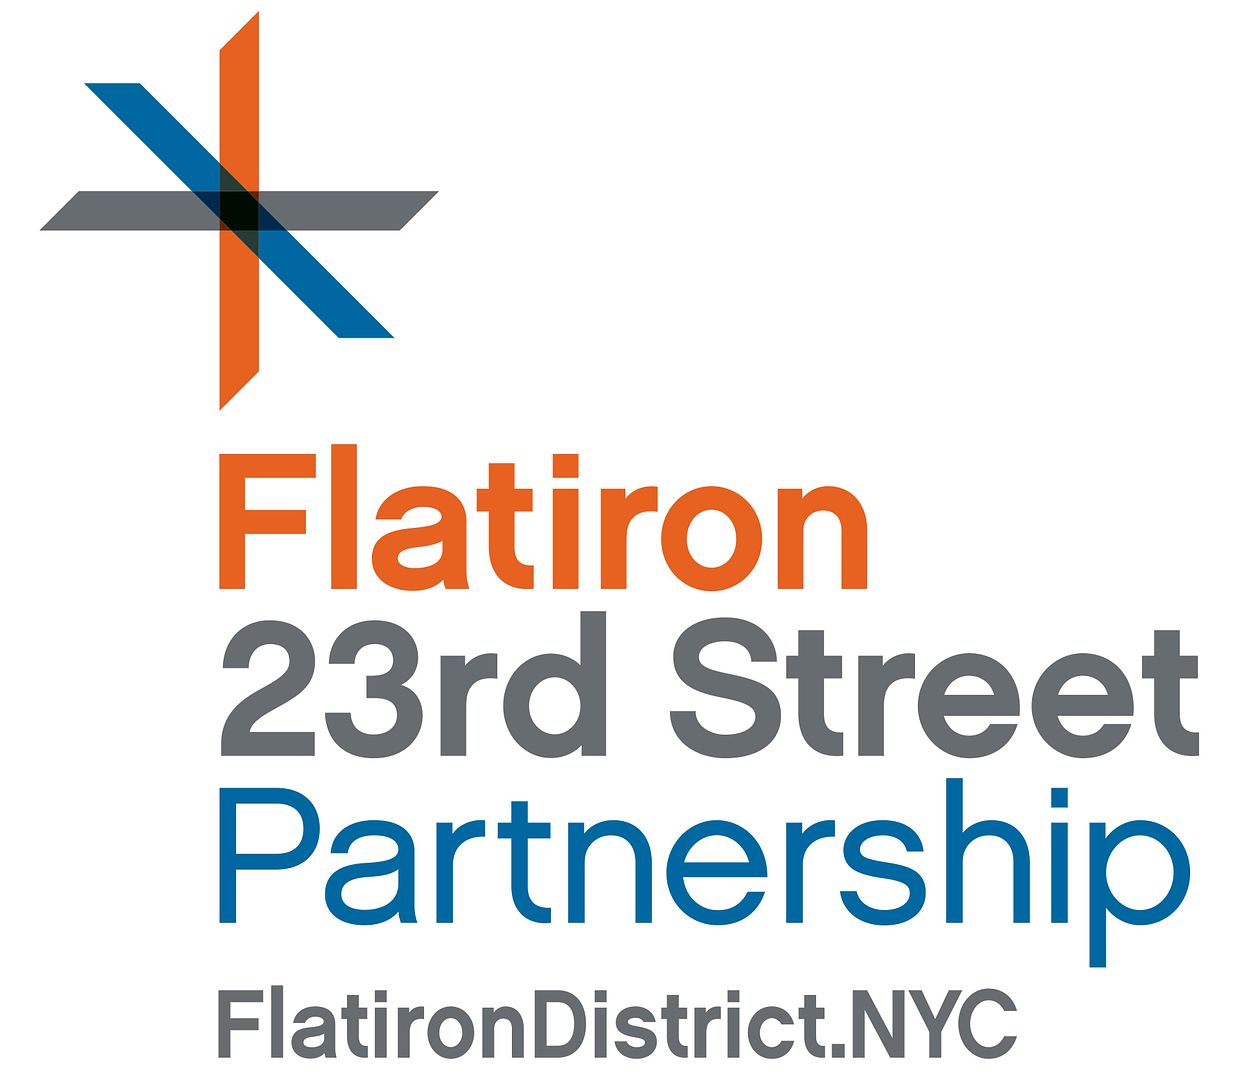 Flatiron/23rd St. Partnership